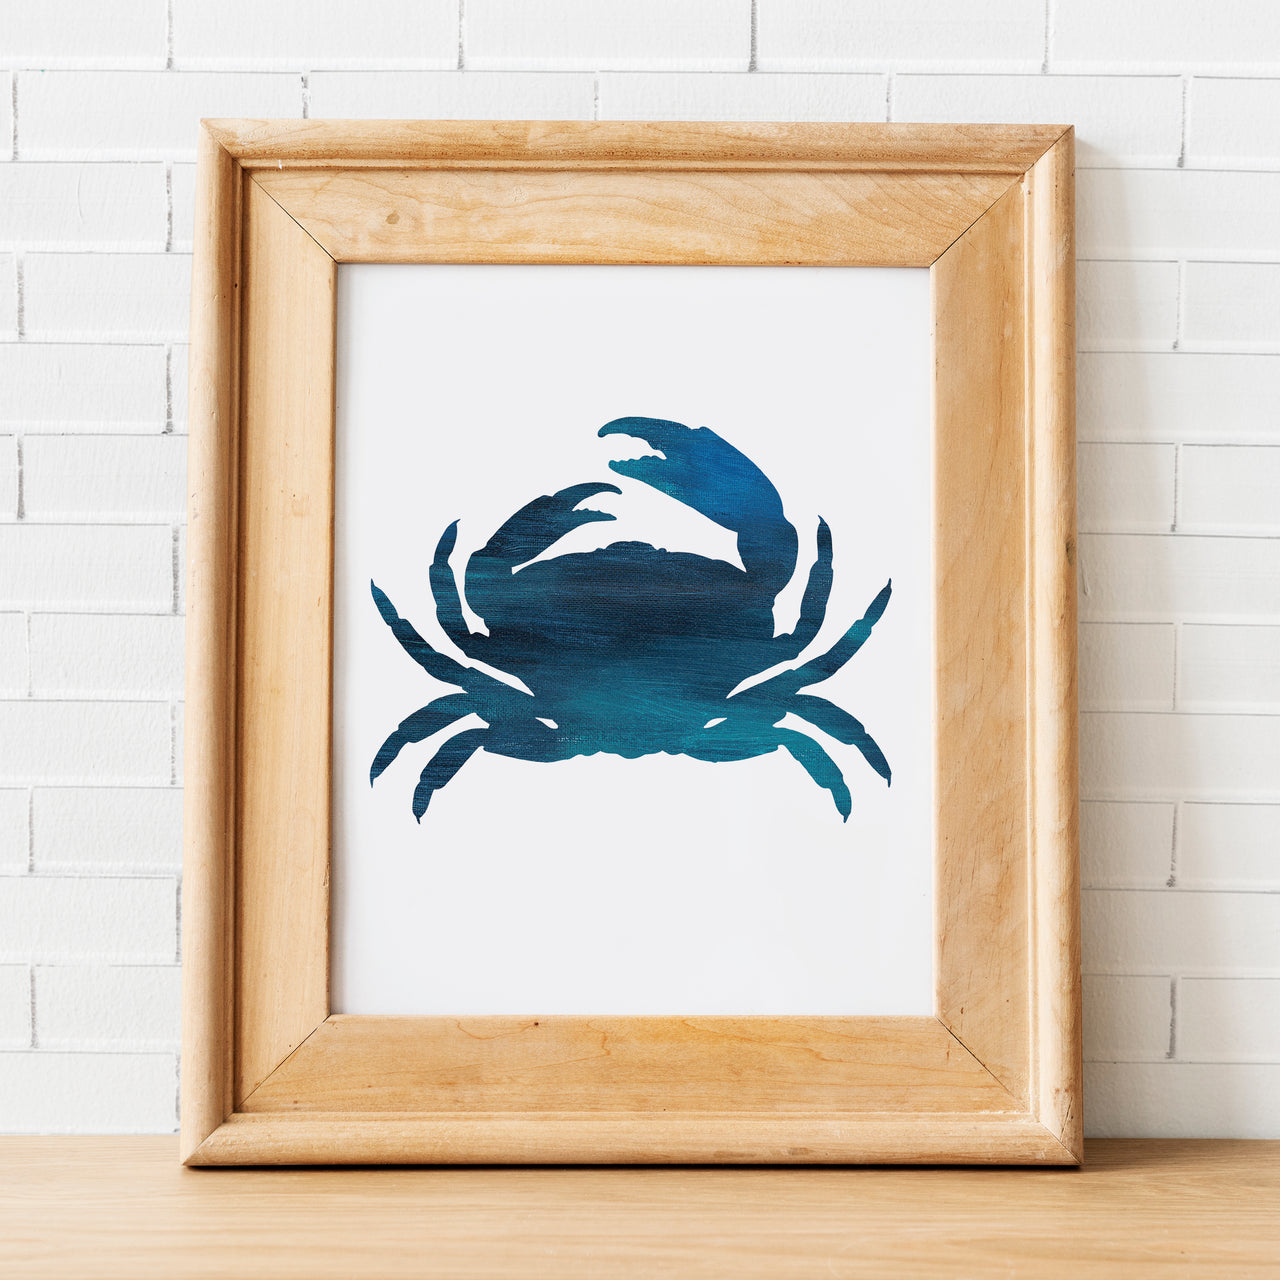 Blue crab art print by Gert & Co